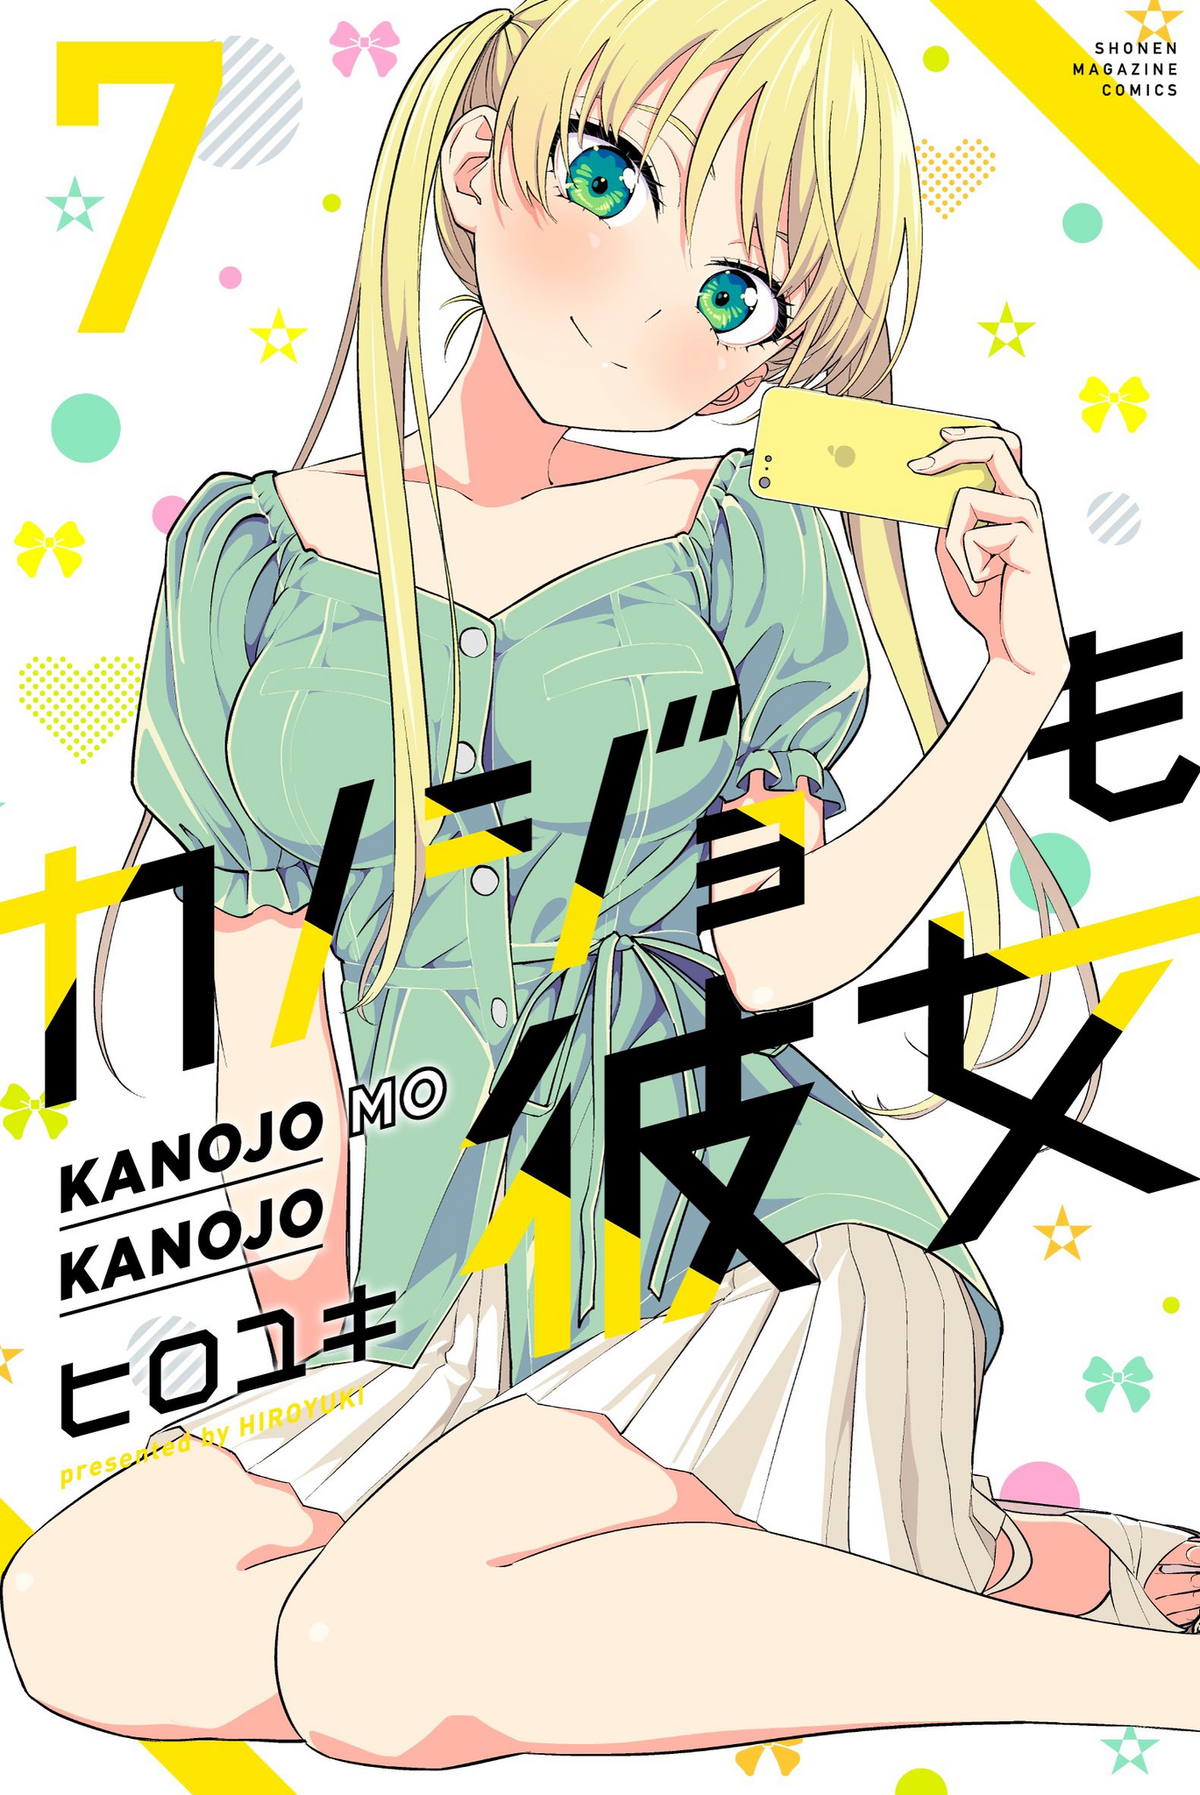 Manga Review: Kanojo mo Kanojo Volume 1 - BagoGames